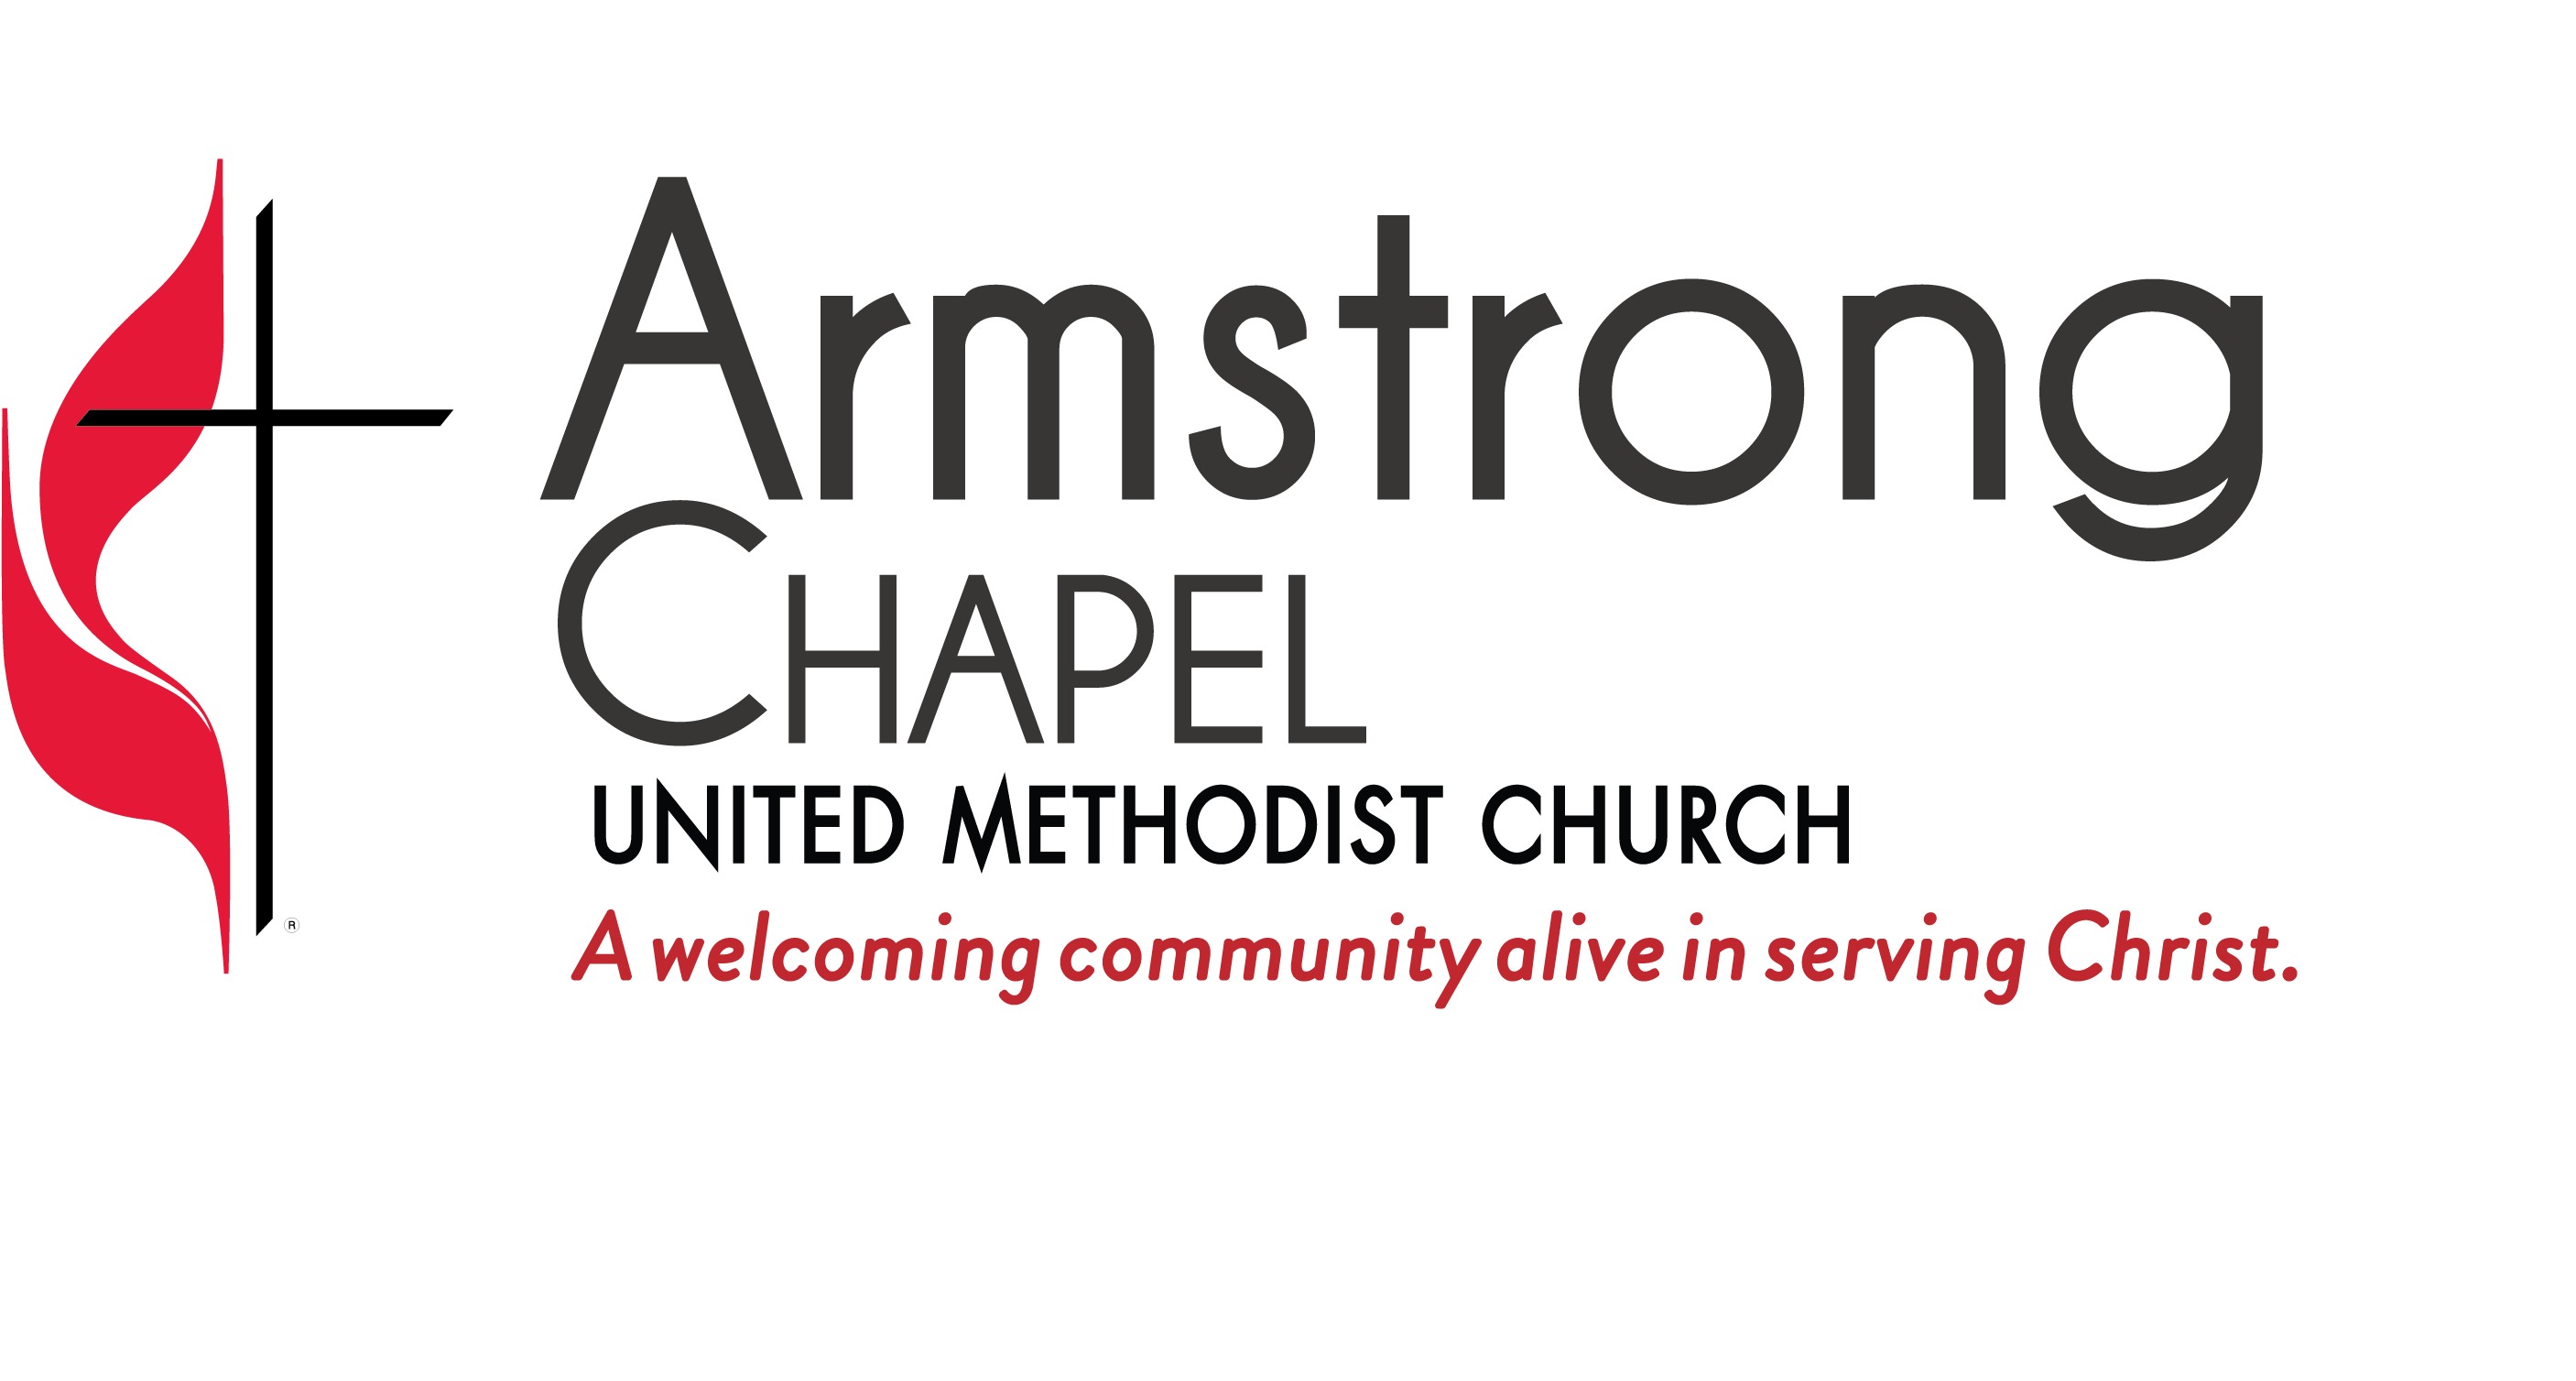 Armstrong Chapel UMC